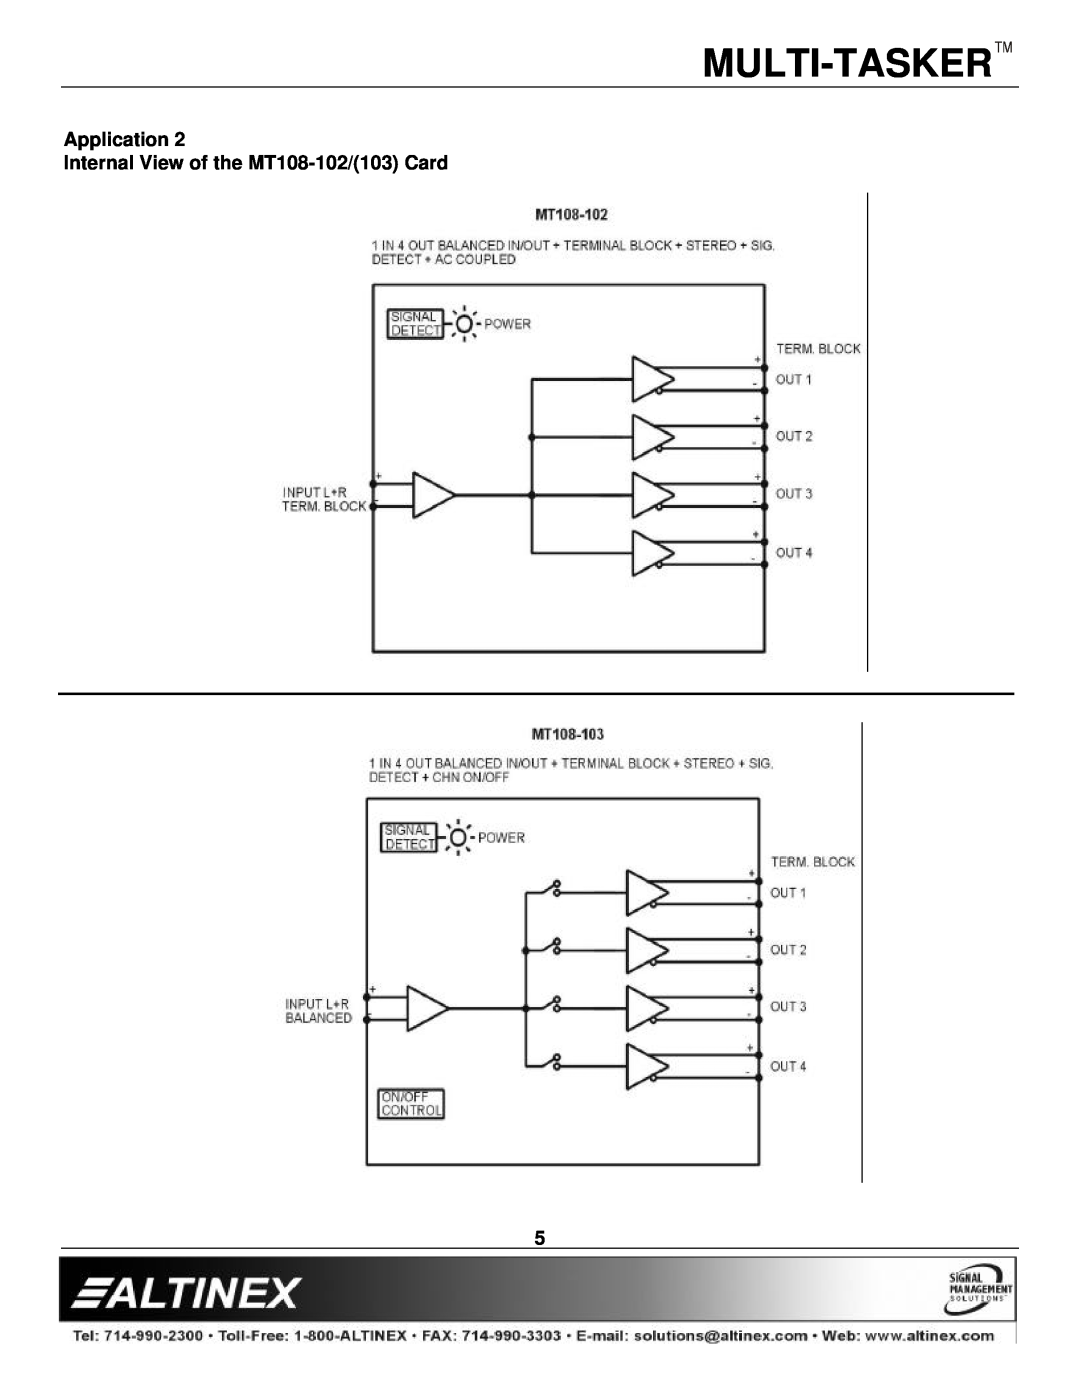 Altinex manual Multi-Tasker, Application, Internal View of the MT108-102/103Card 